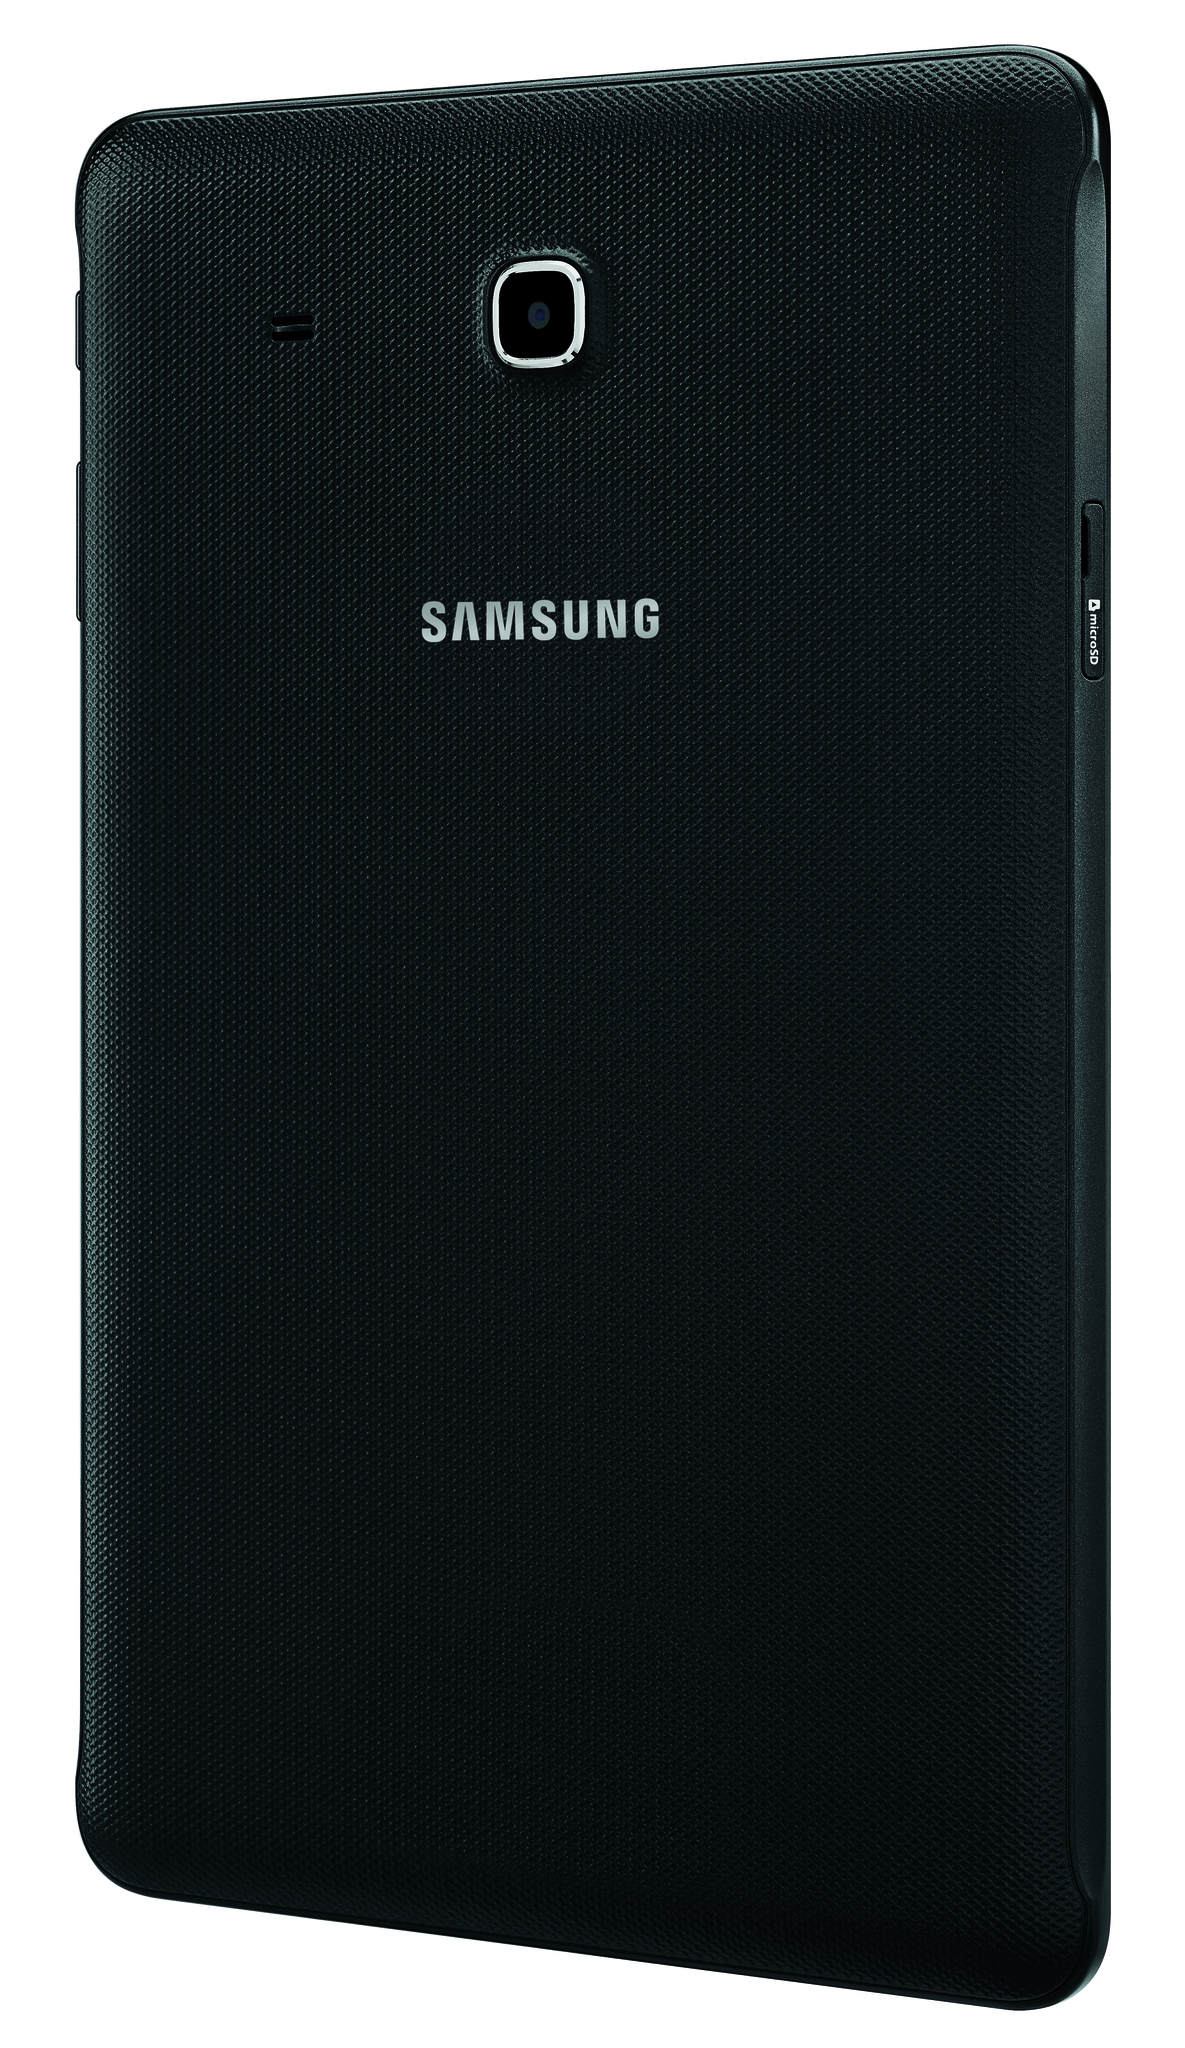 Samsung Galaxy Tab E 9.6 + $25 Google Play Card - image 5 of 9